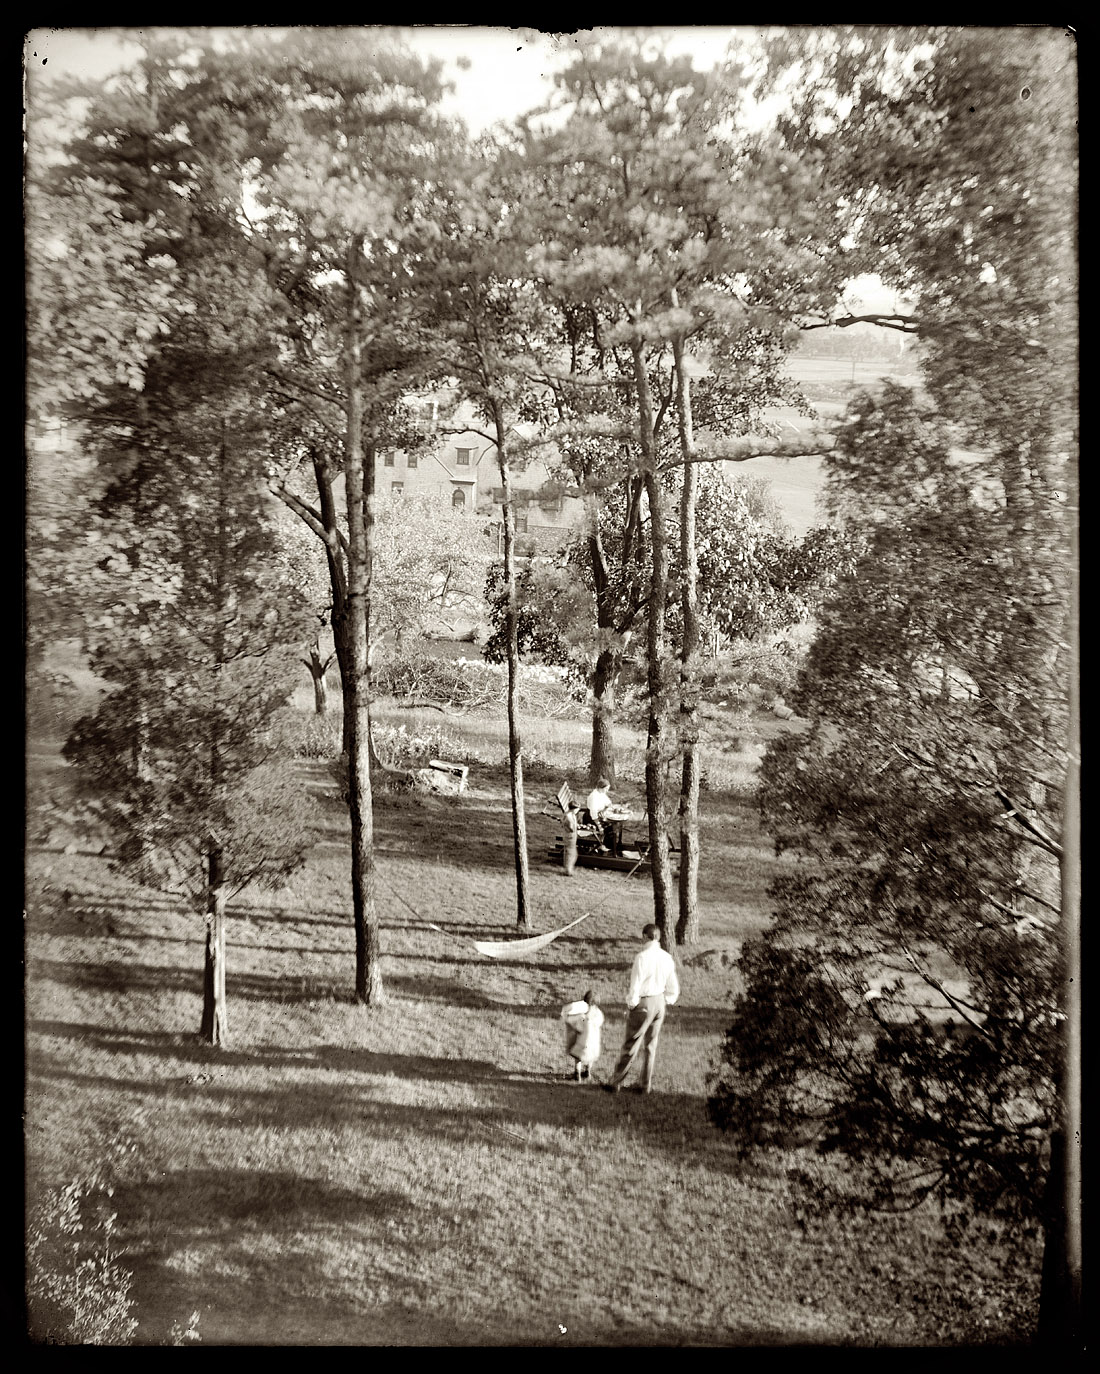 "The Turner garden at Waban, Massachusetts. 1910." View full size. 8x10 dry plate glass negative by Gertrude Käsebier. Gift of Mina Turner, 1964.